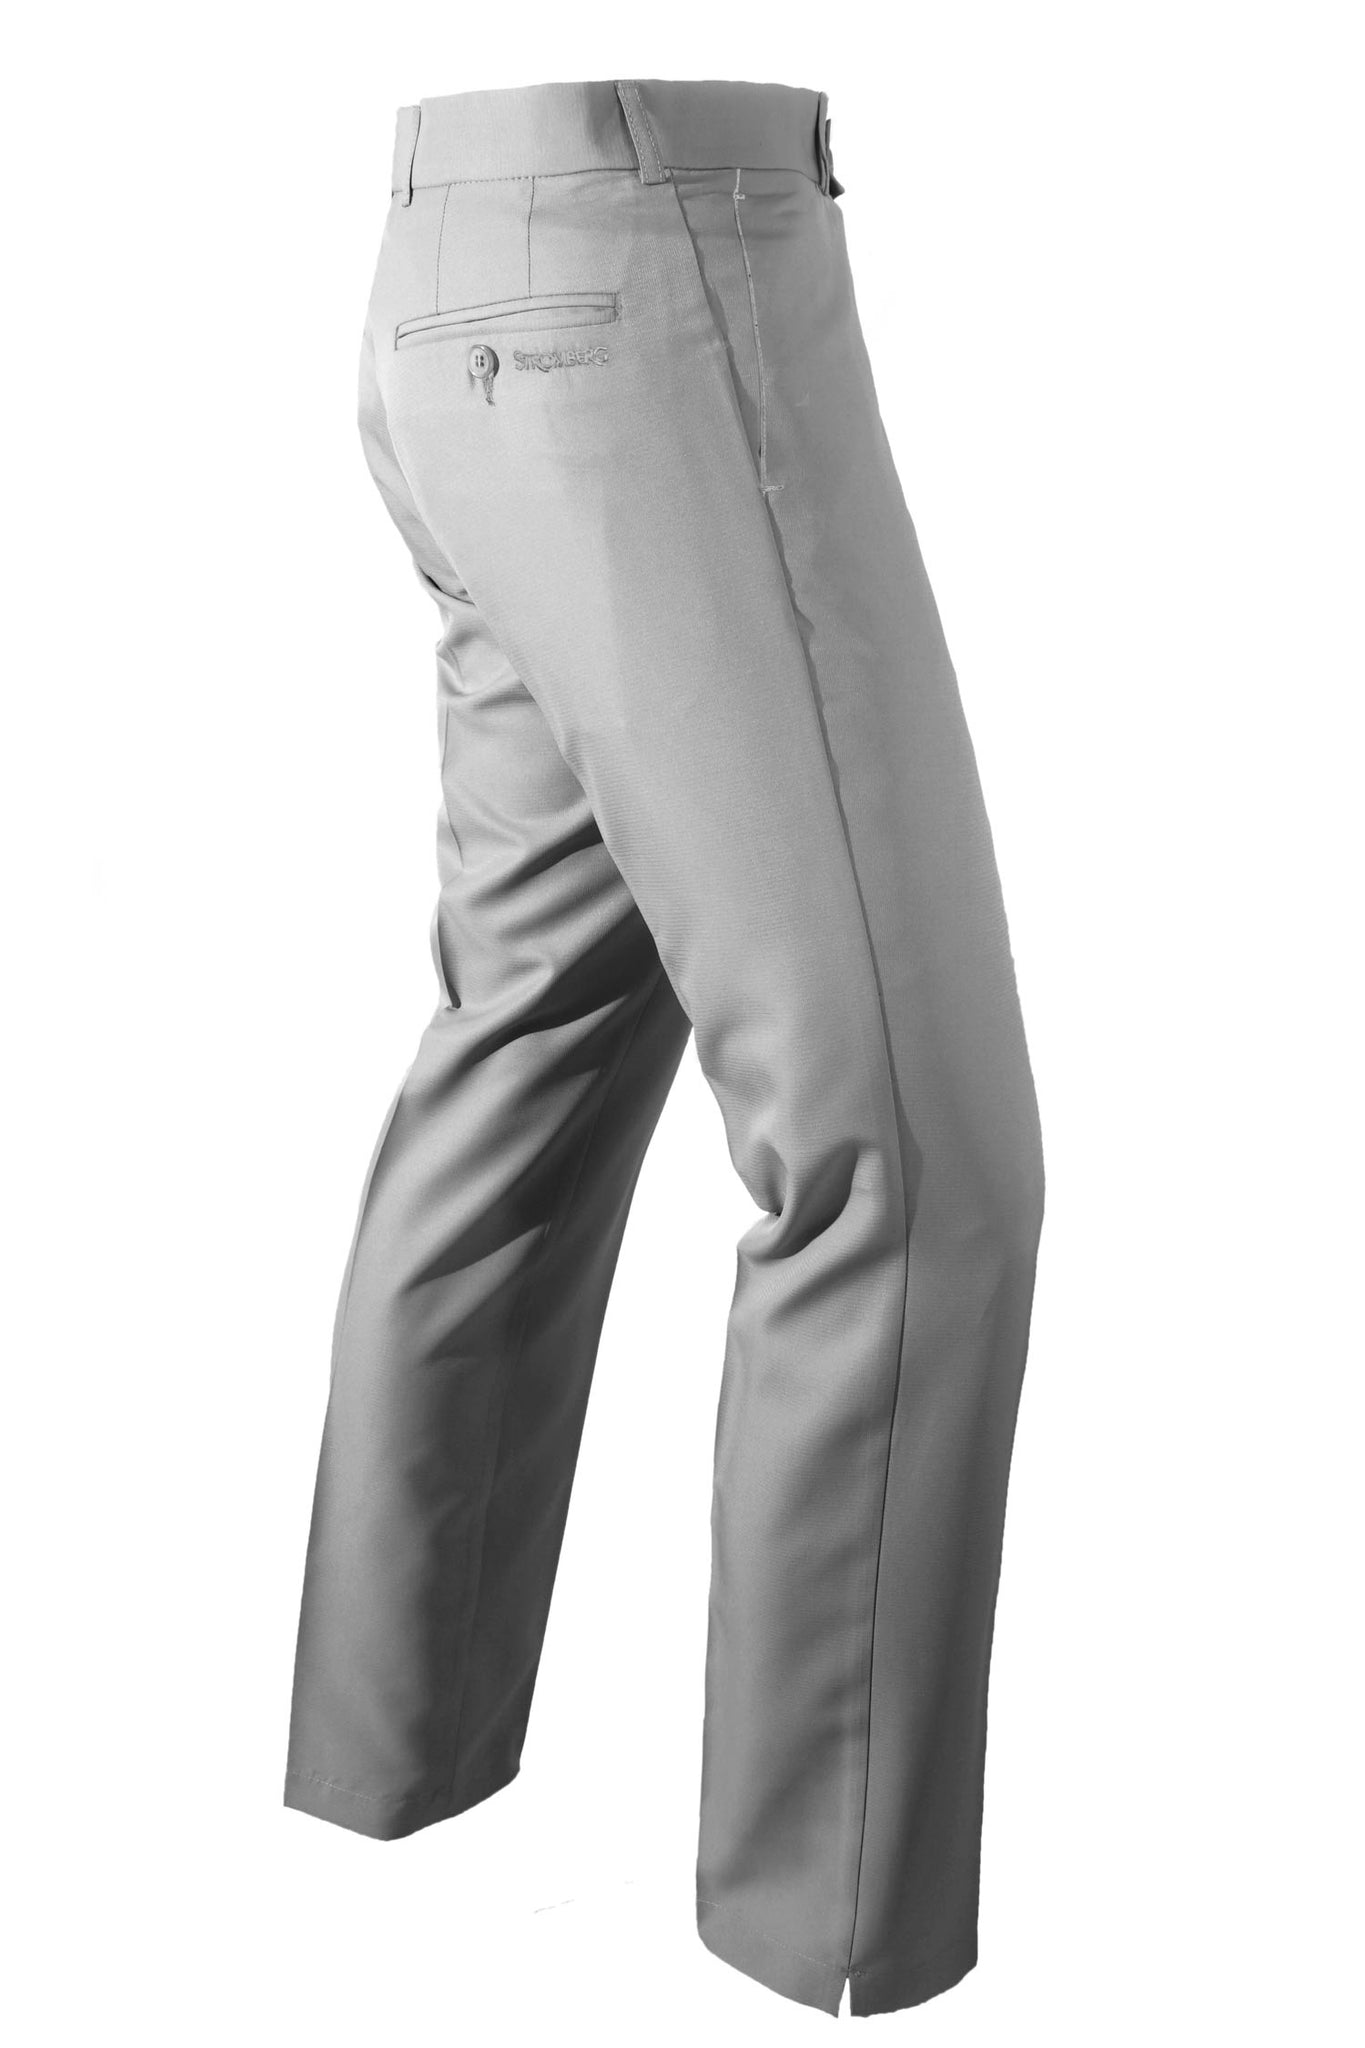 Adidas Golf Pants Men 34 x 32 Gray Flat Front Nylon Stretch Outdoor Quick  Dry | eBay